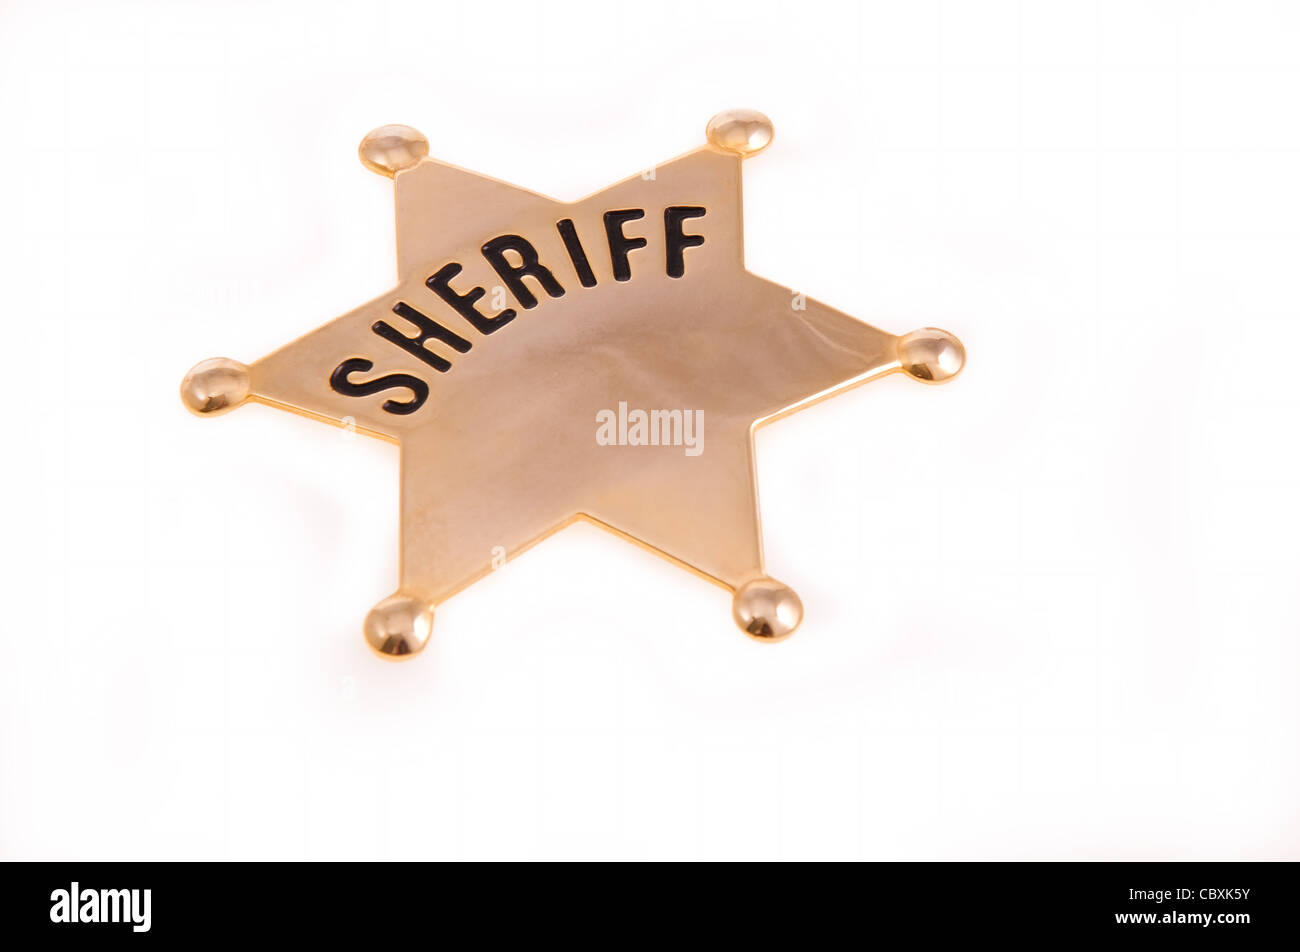 Sheriffs Badge Stock Photo